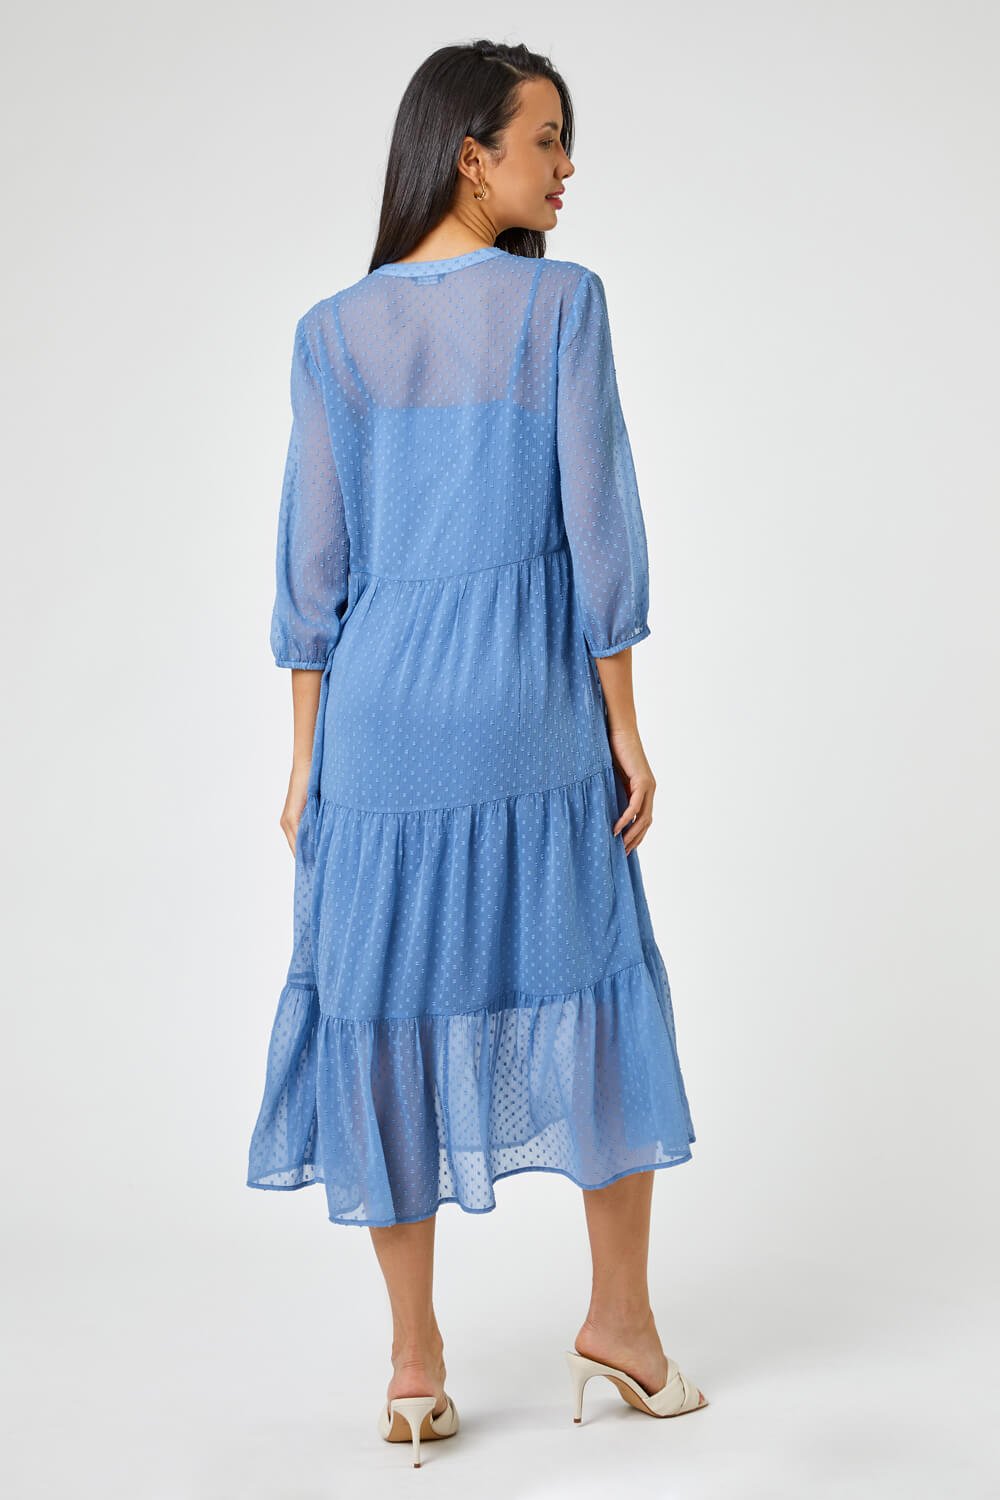 Sky Blue Textured Spot Print Tiered Midi Dress, Image 3 of 5